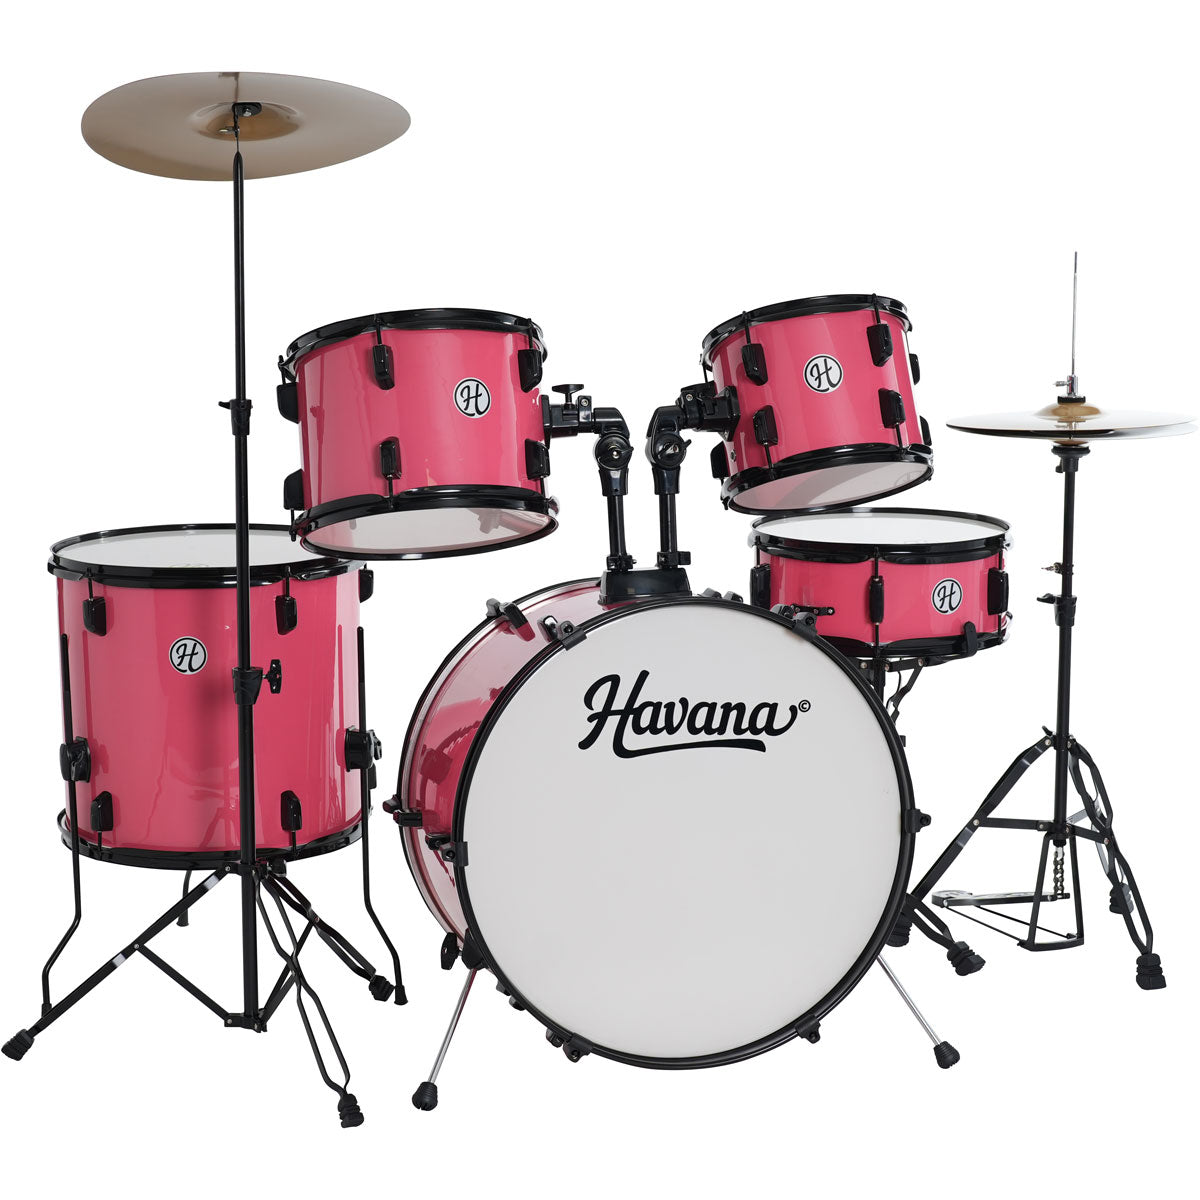 Havana HV 522 Acoustic Drum (full kit) 5PCs set including Hardware